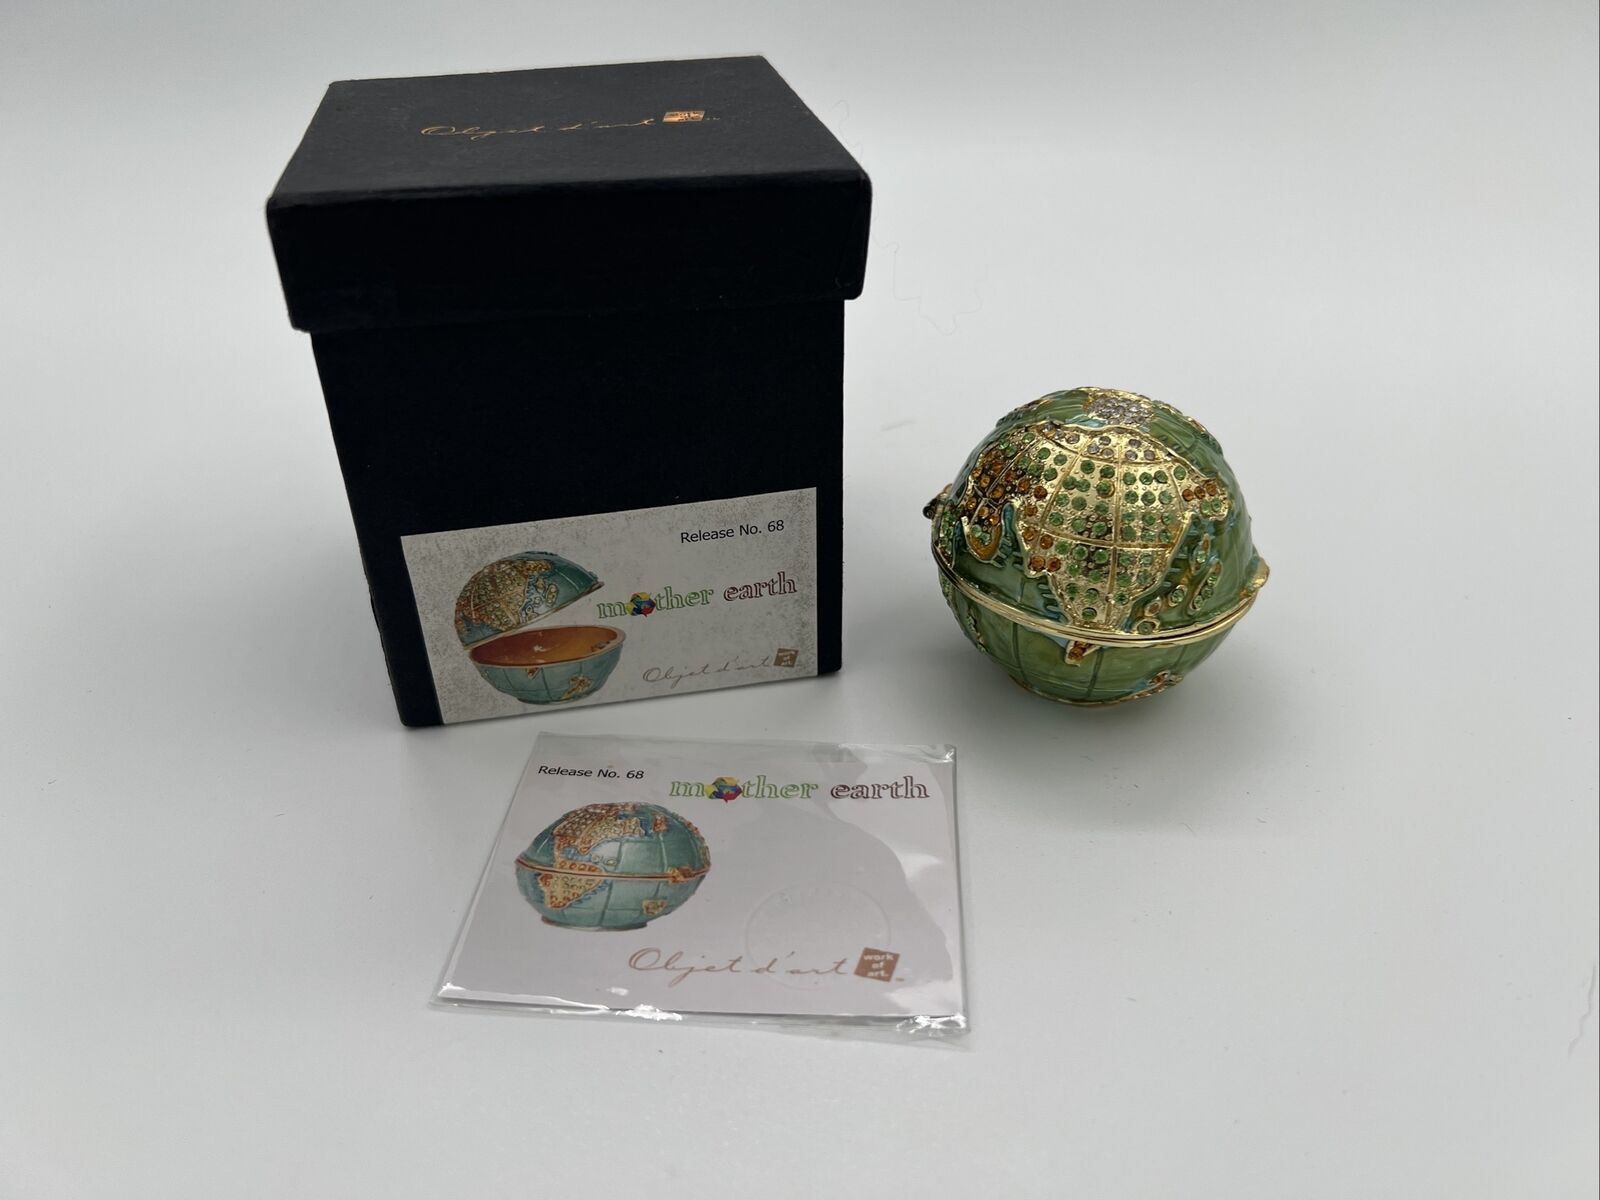 Objet D’art Artform ‘Mother Earth’ Collectible Trinket Box, NIB, Release #68 